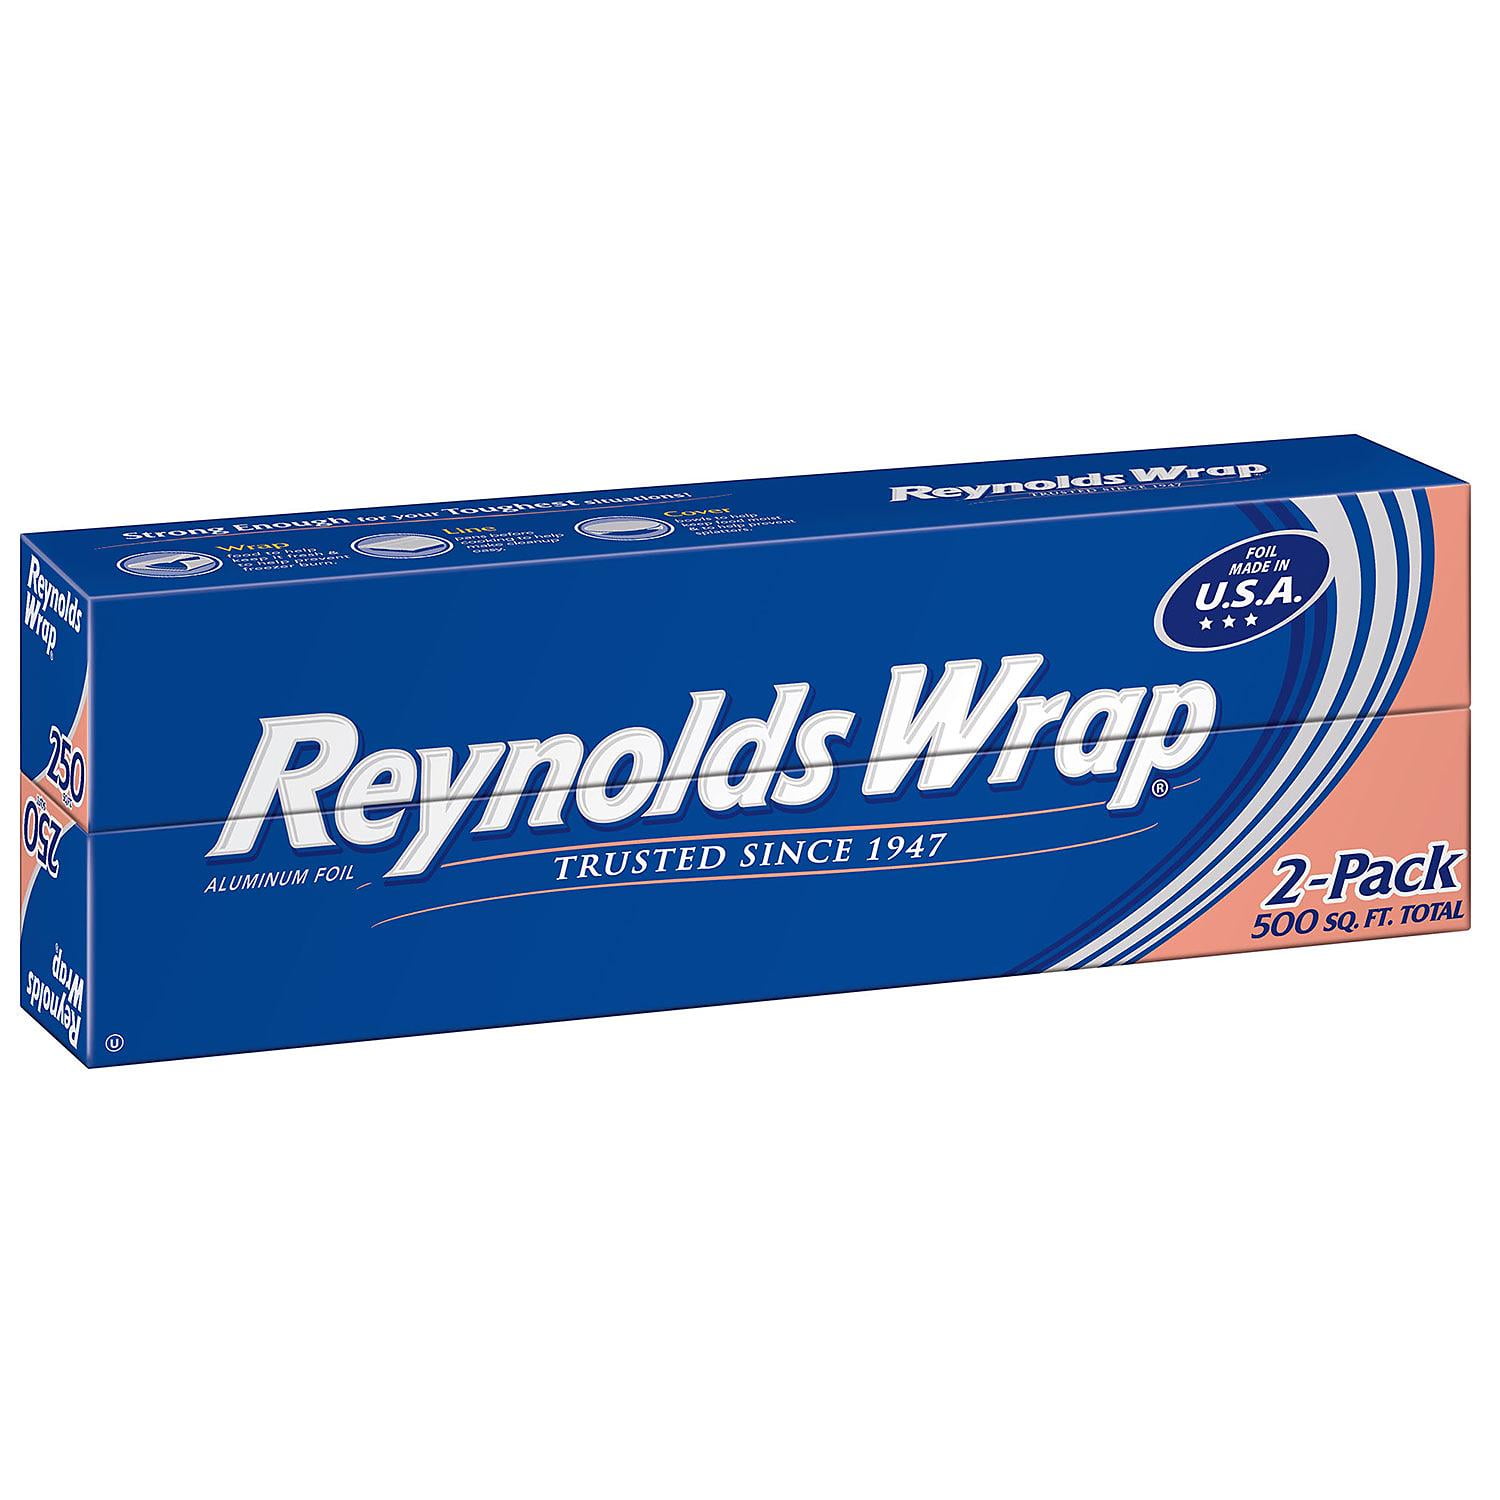 8 6 12 Reynolds Wrap Standard Aluminum Foil Roll 12 in x 15 ft pack 4 10 